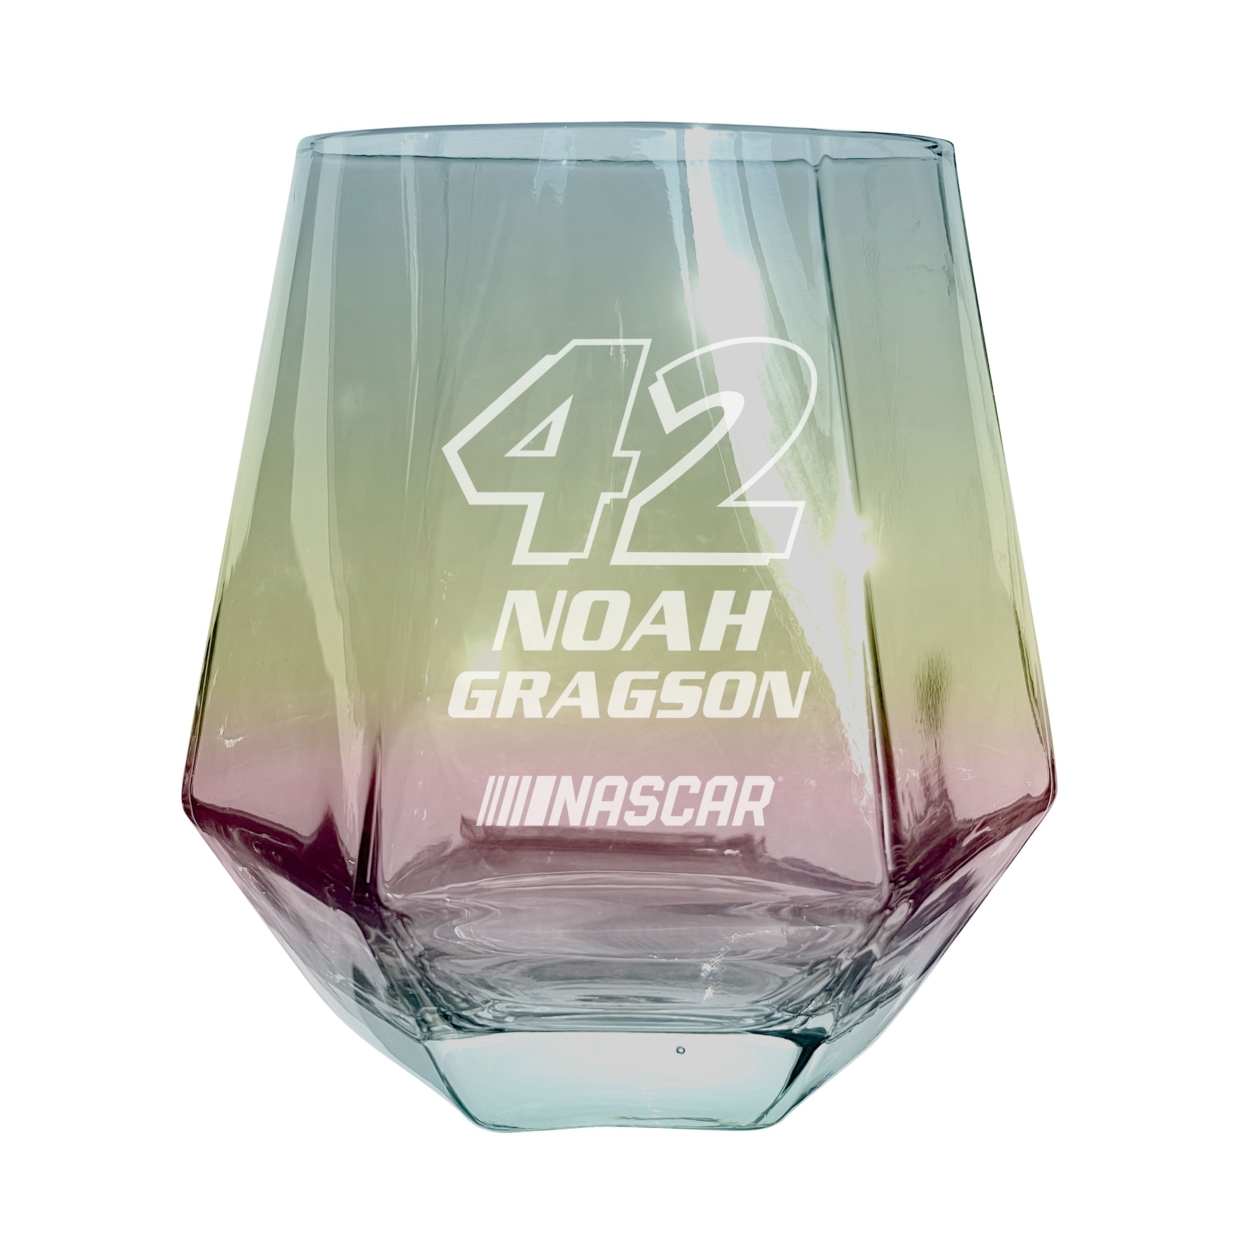 #42 Noah Gragson Officially Licensed 10 Oz Engraved Diamond Wine Glass - Grey, Single